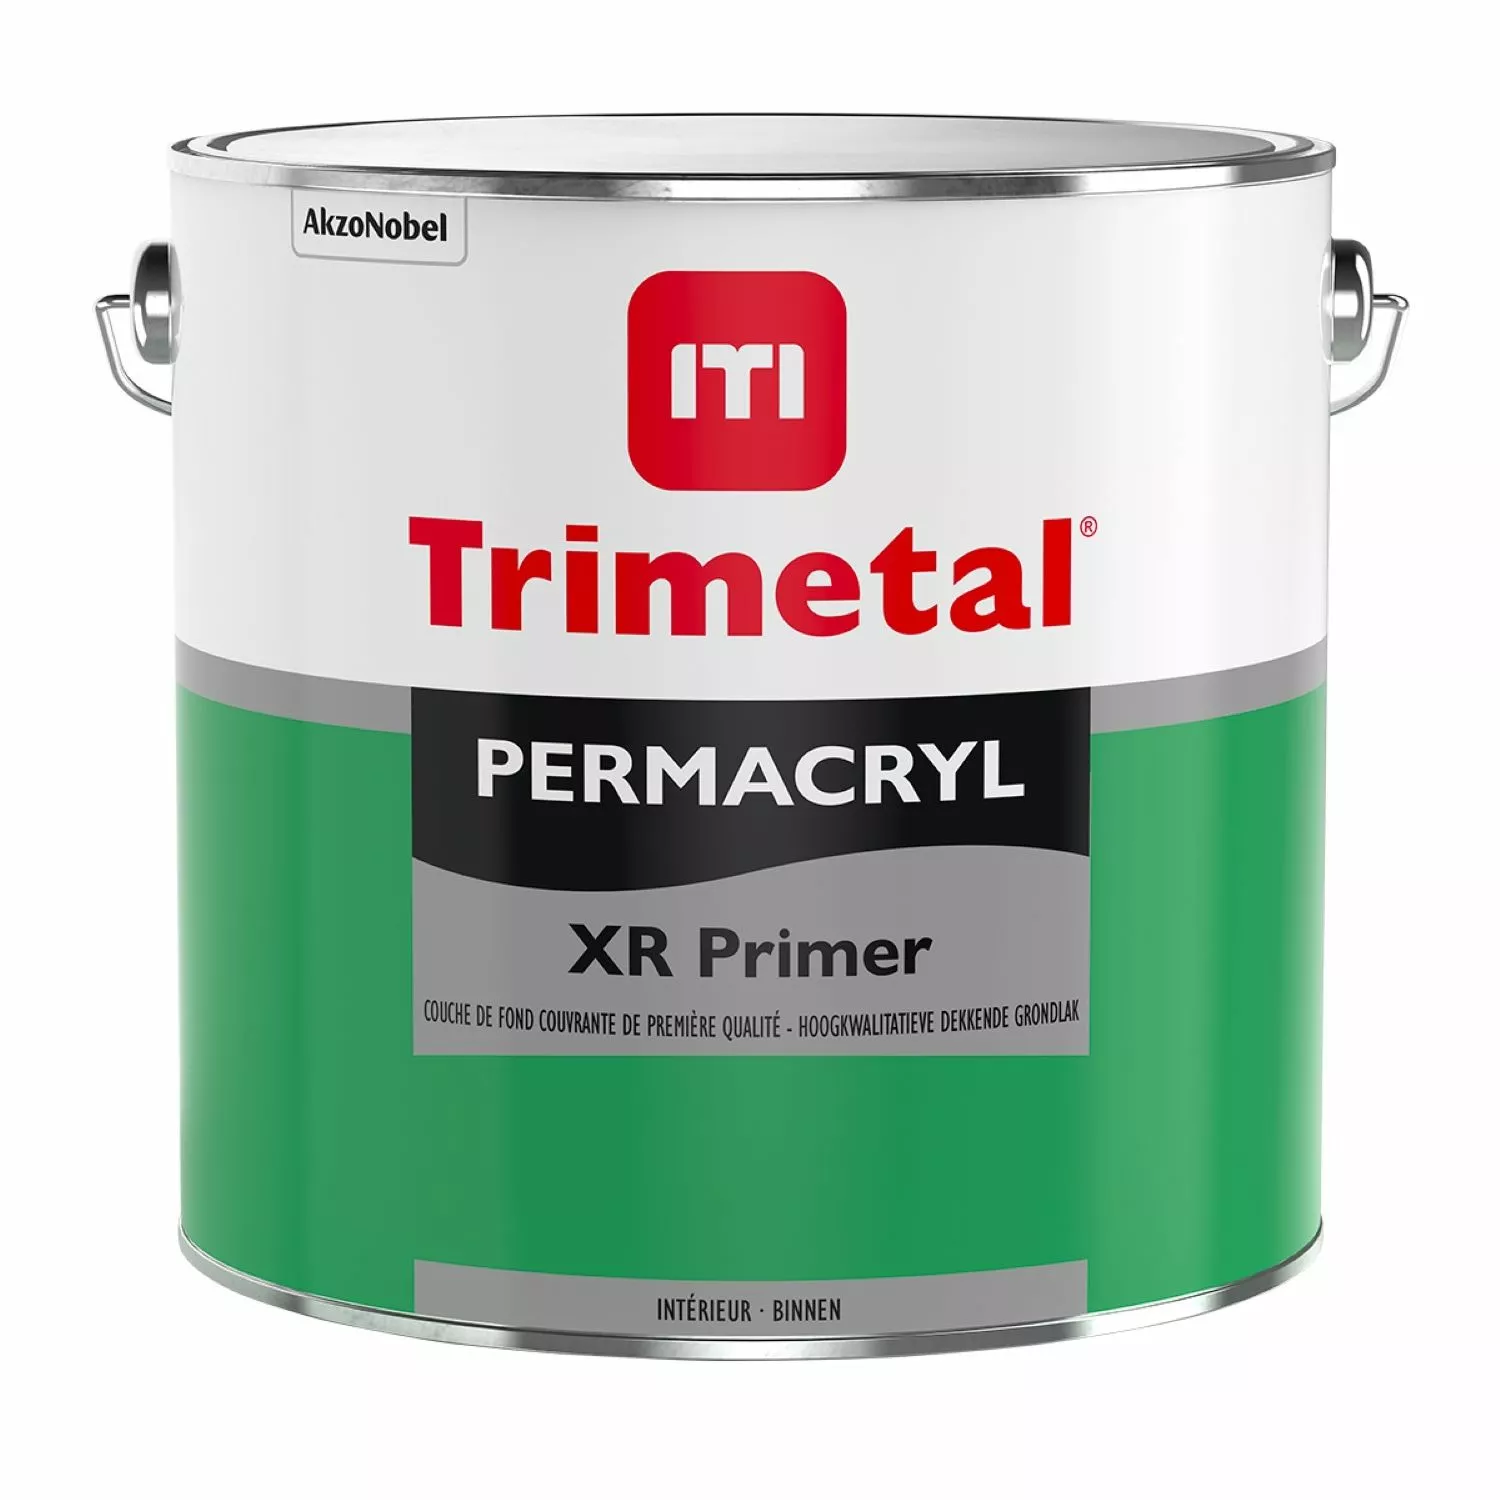 Trimetal Permacryl XR Primer grondlak - op kleur gemengd - 1L-image